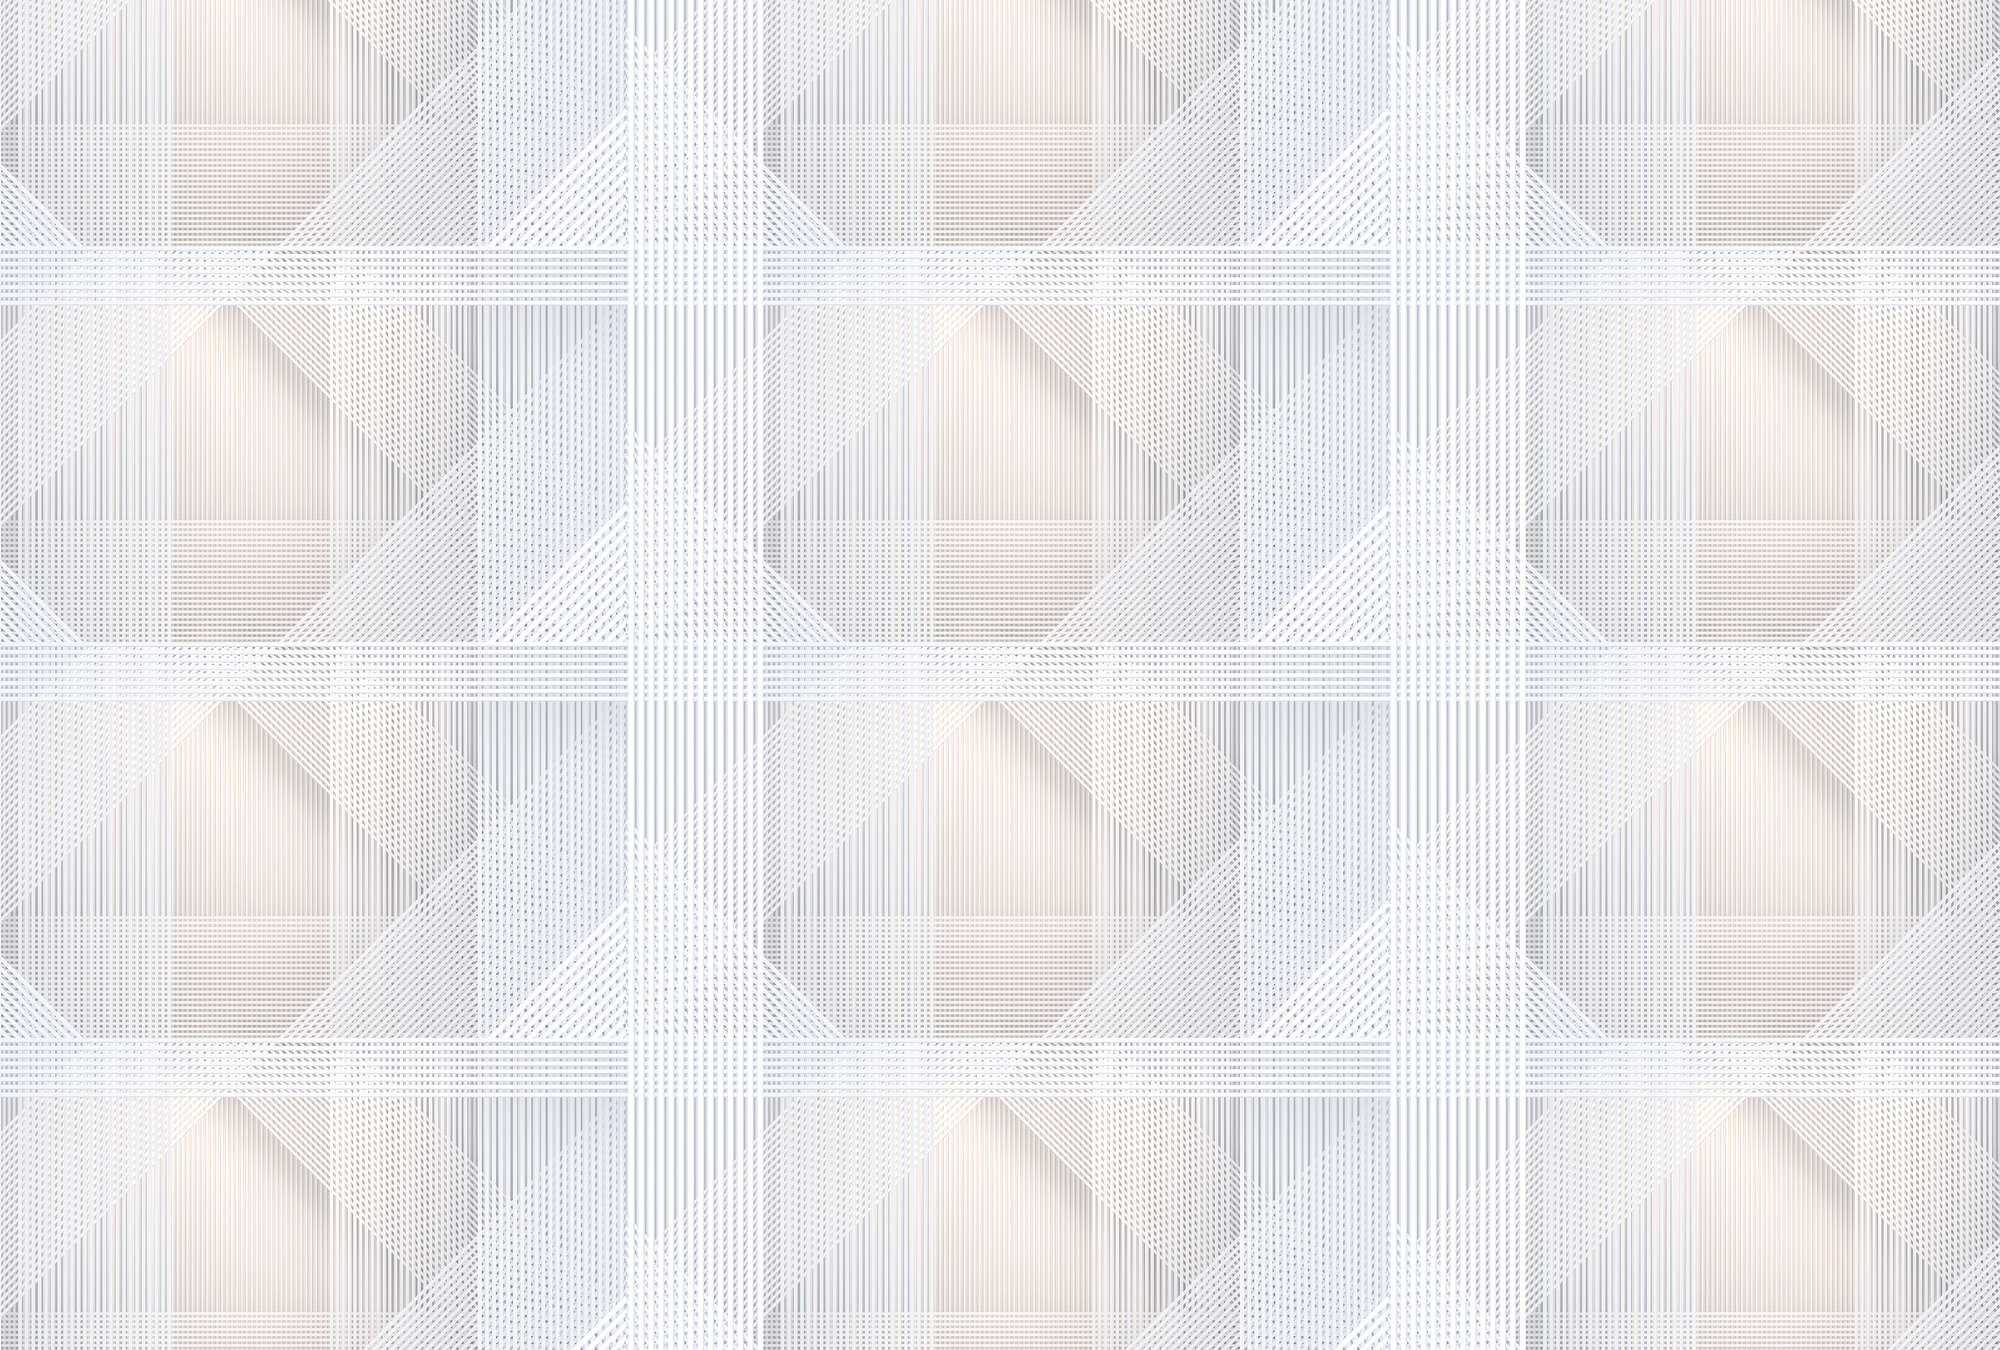             Strings 1 - Photo wallpaper geometric stripe pattern - Grey, Orange | Matt smooth fleece
        